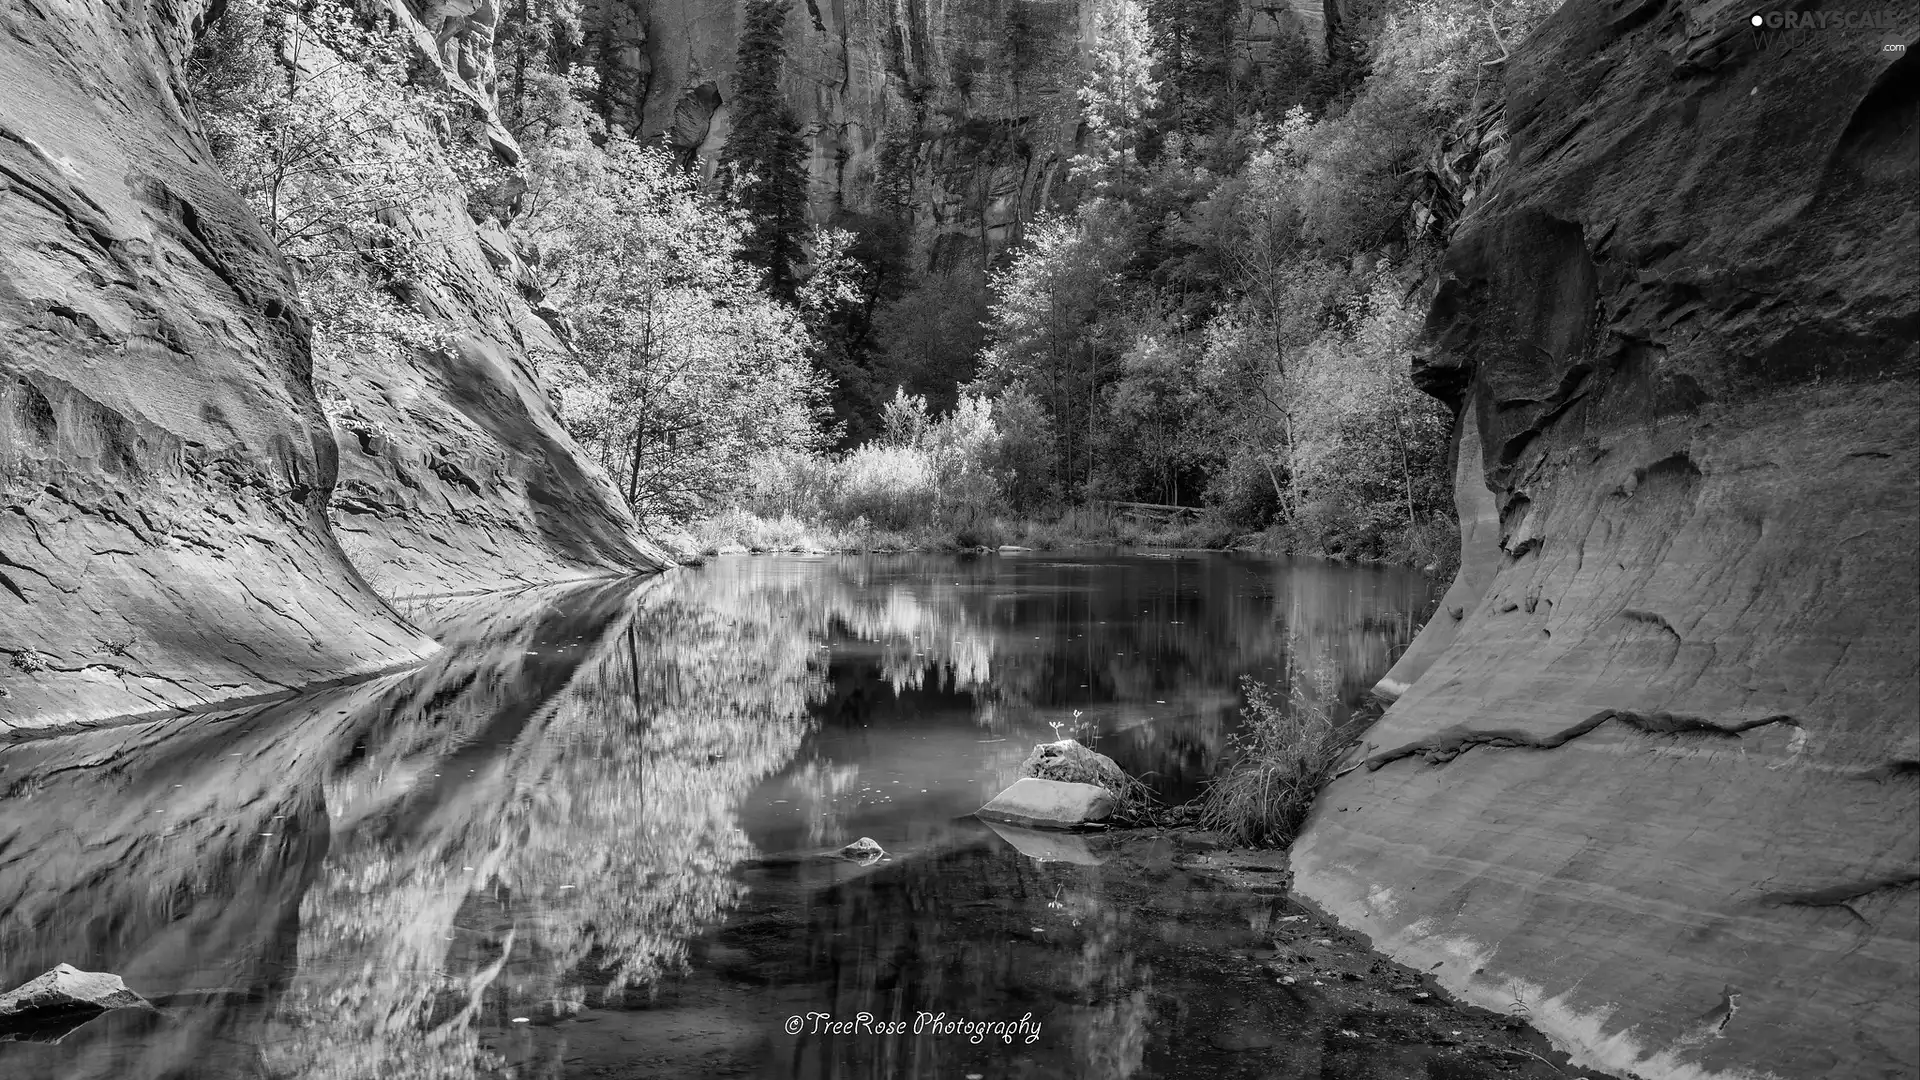 Arizona, The United States, Sedona, rocks, viewes, reflection, River, trees, canyon